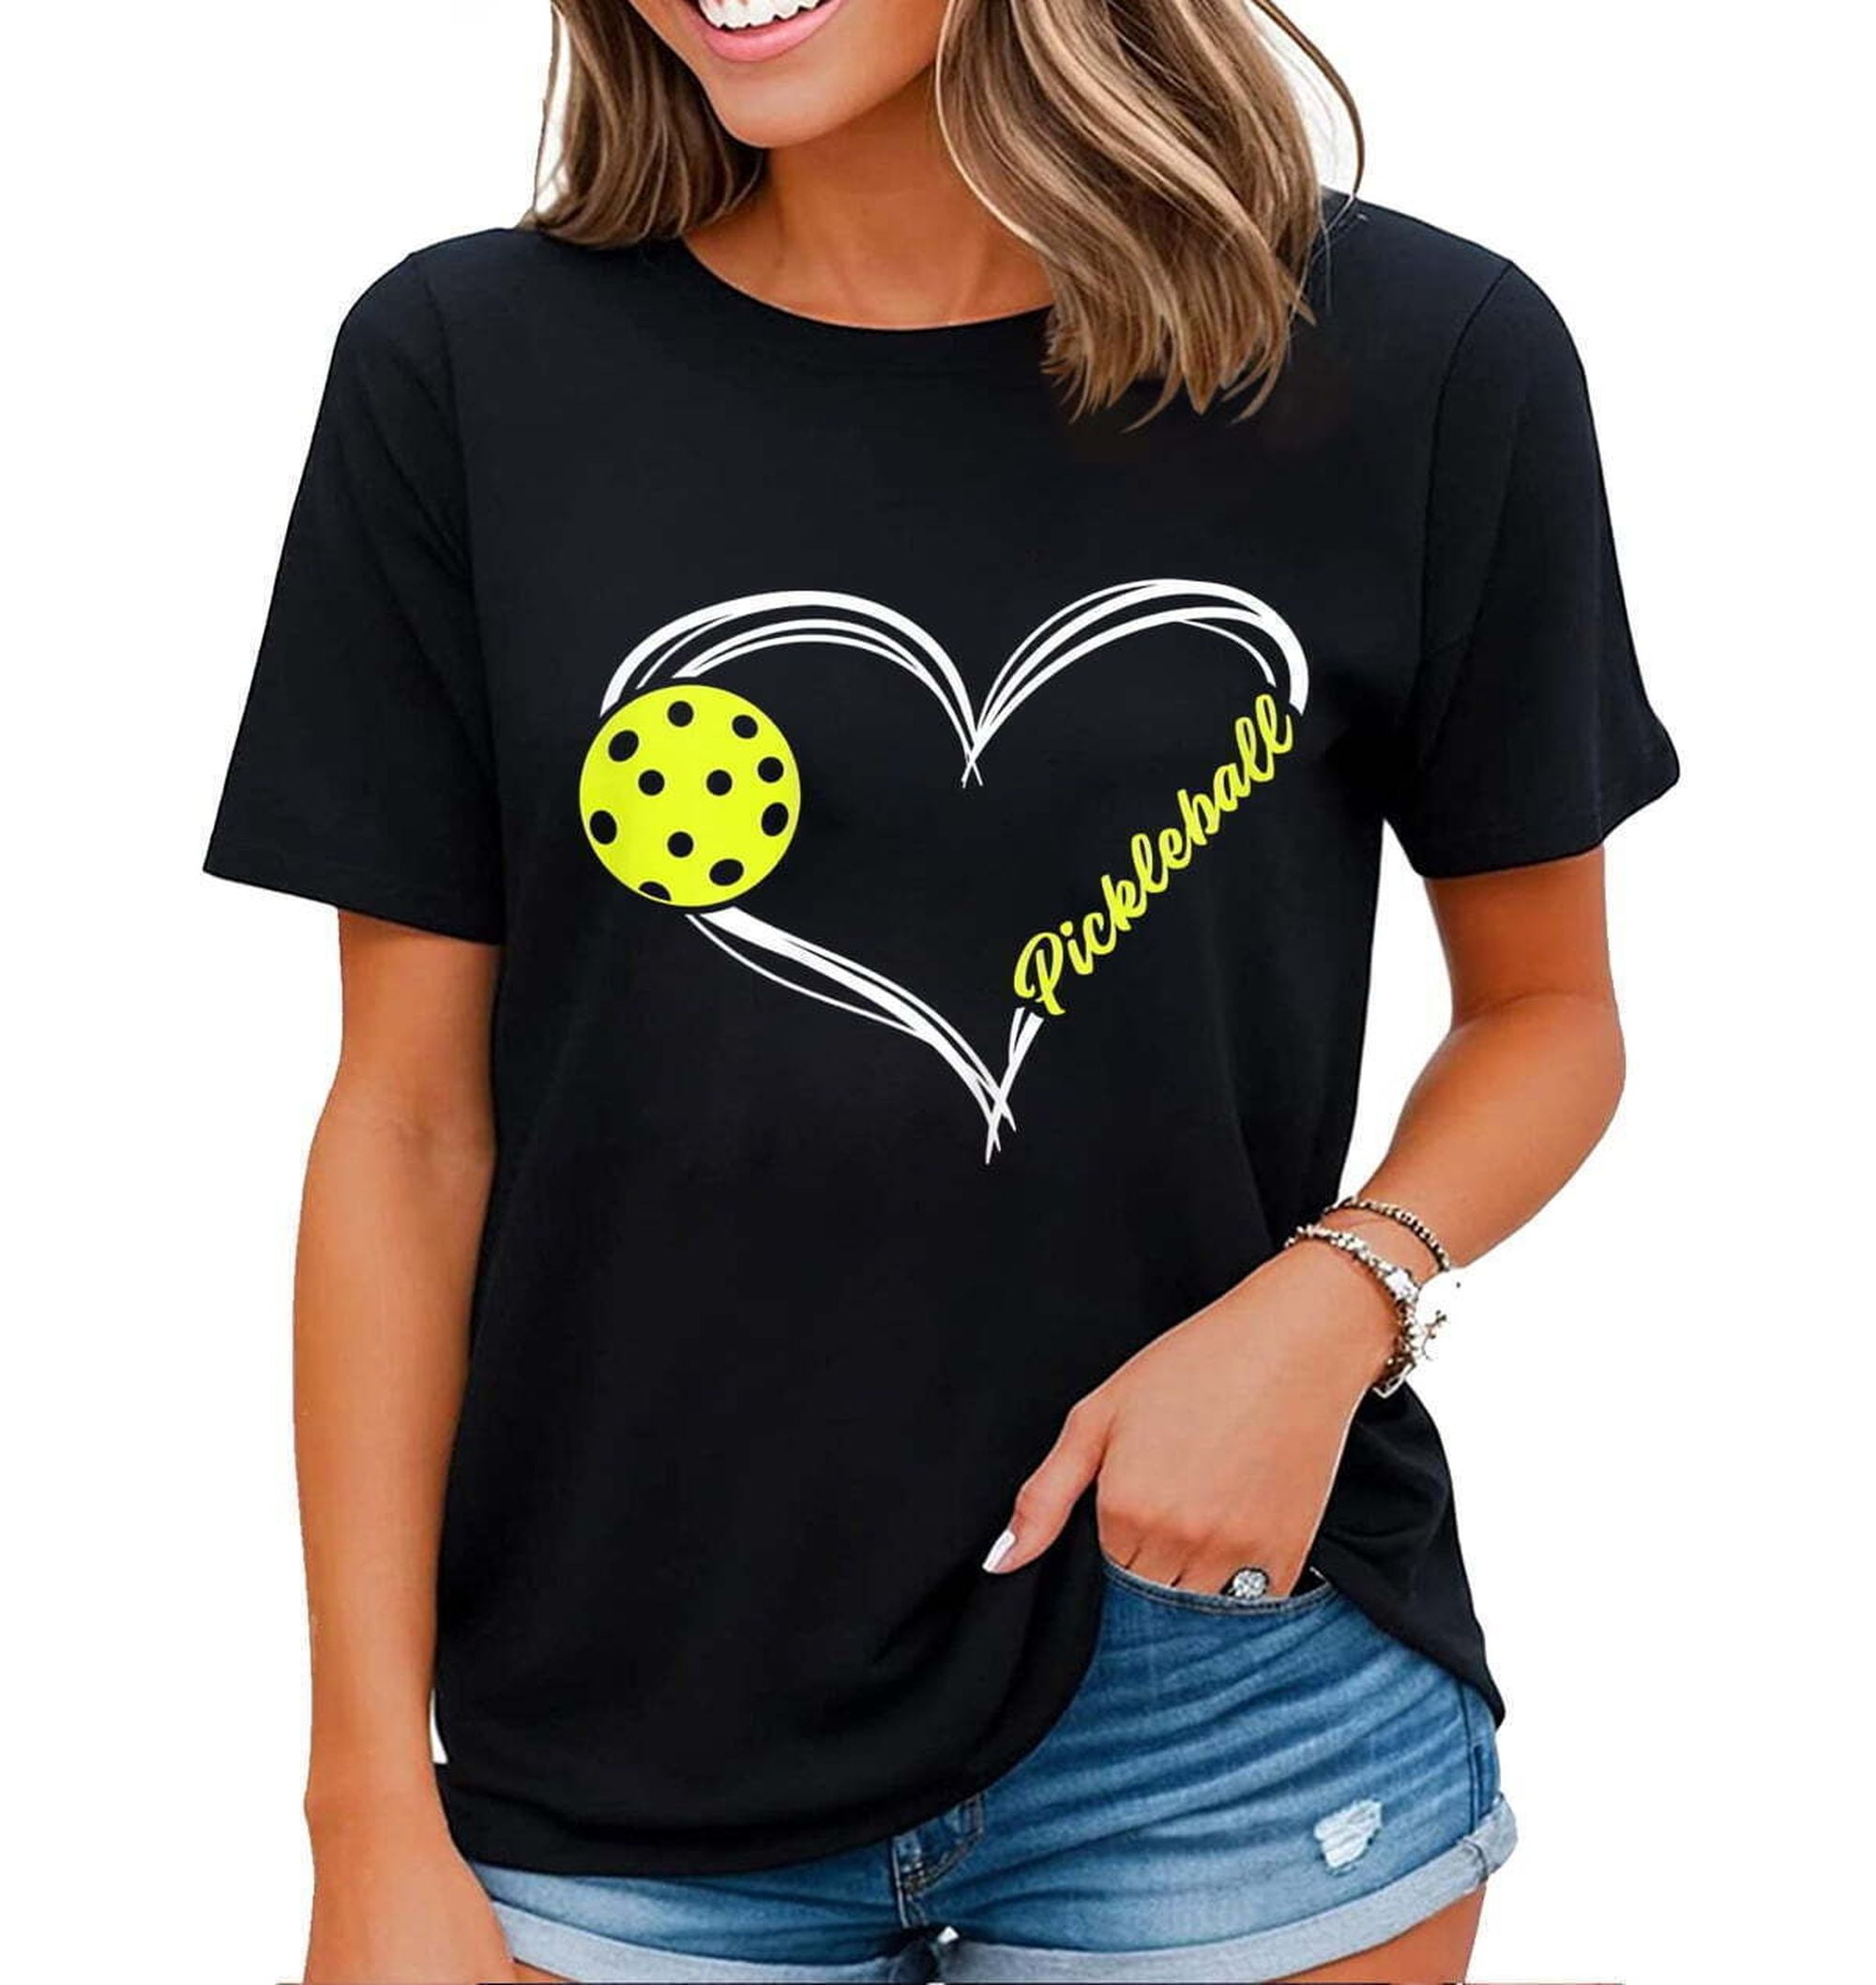 Pickleball Lover's Match Shirt - Fun and Adorable Pickleball T-Shirt ...